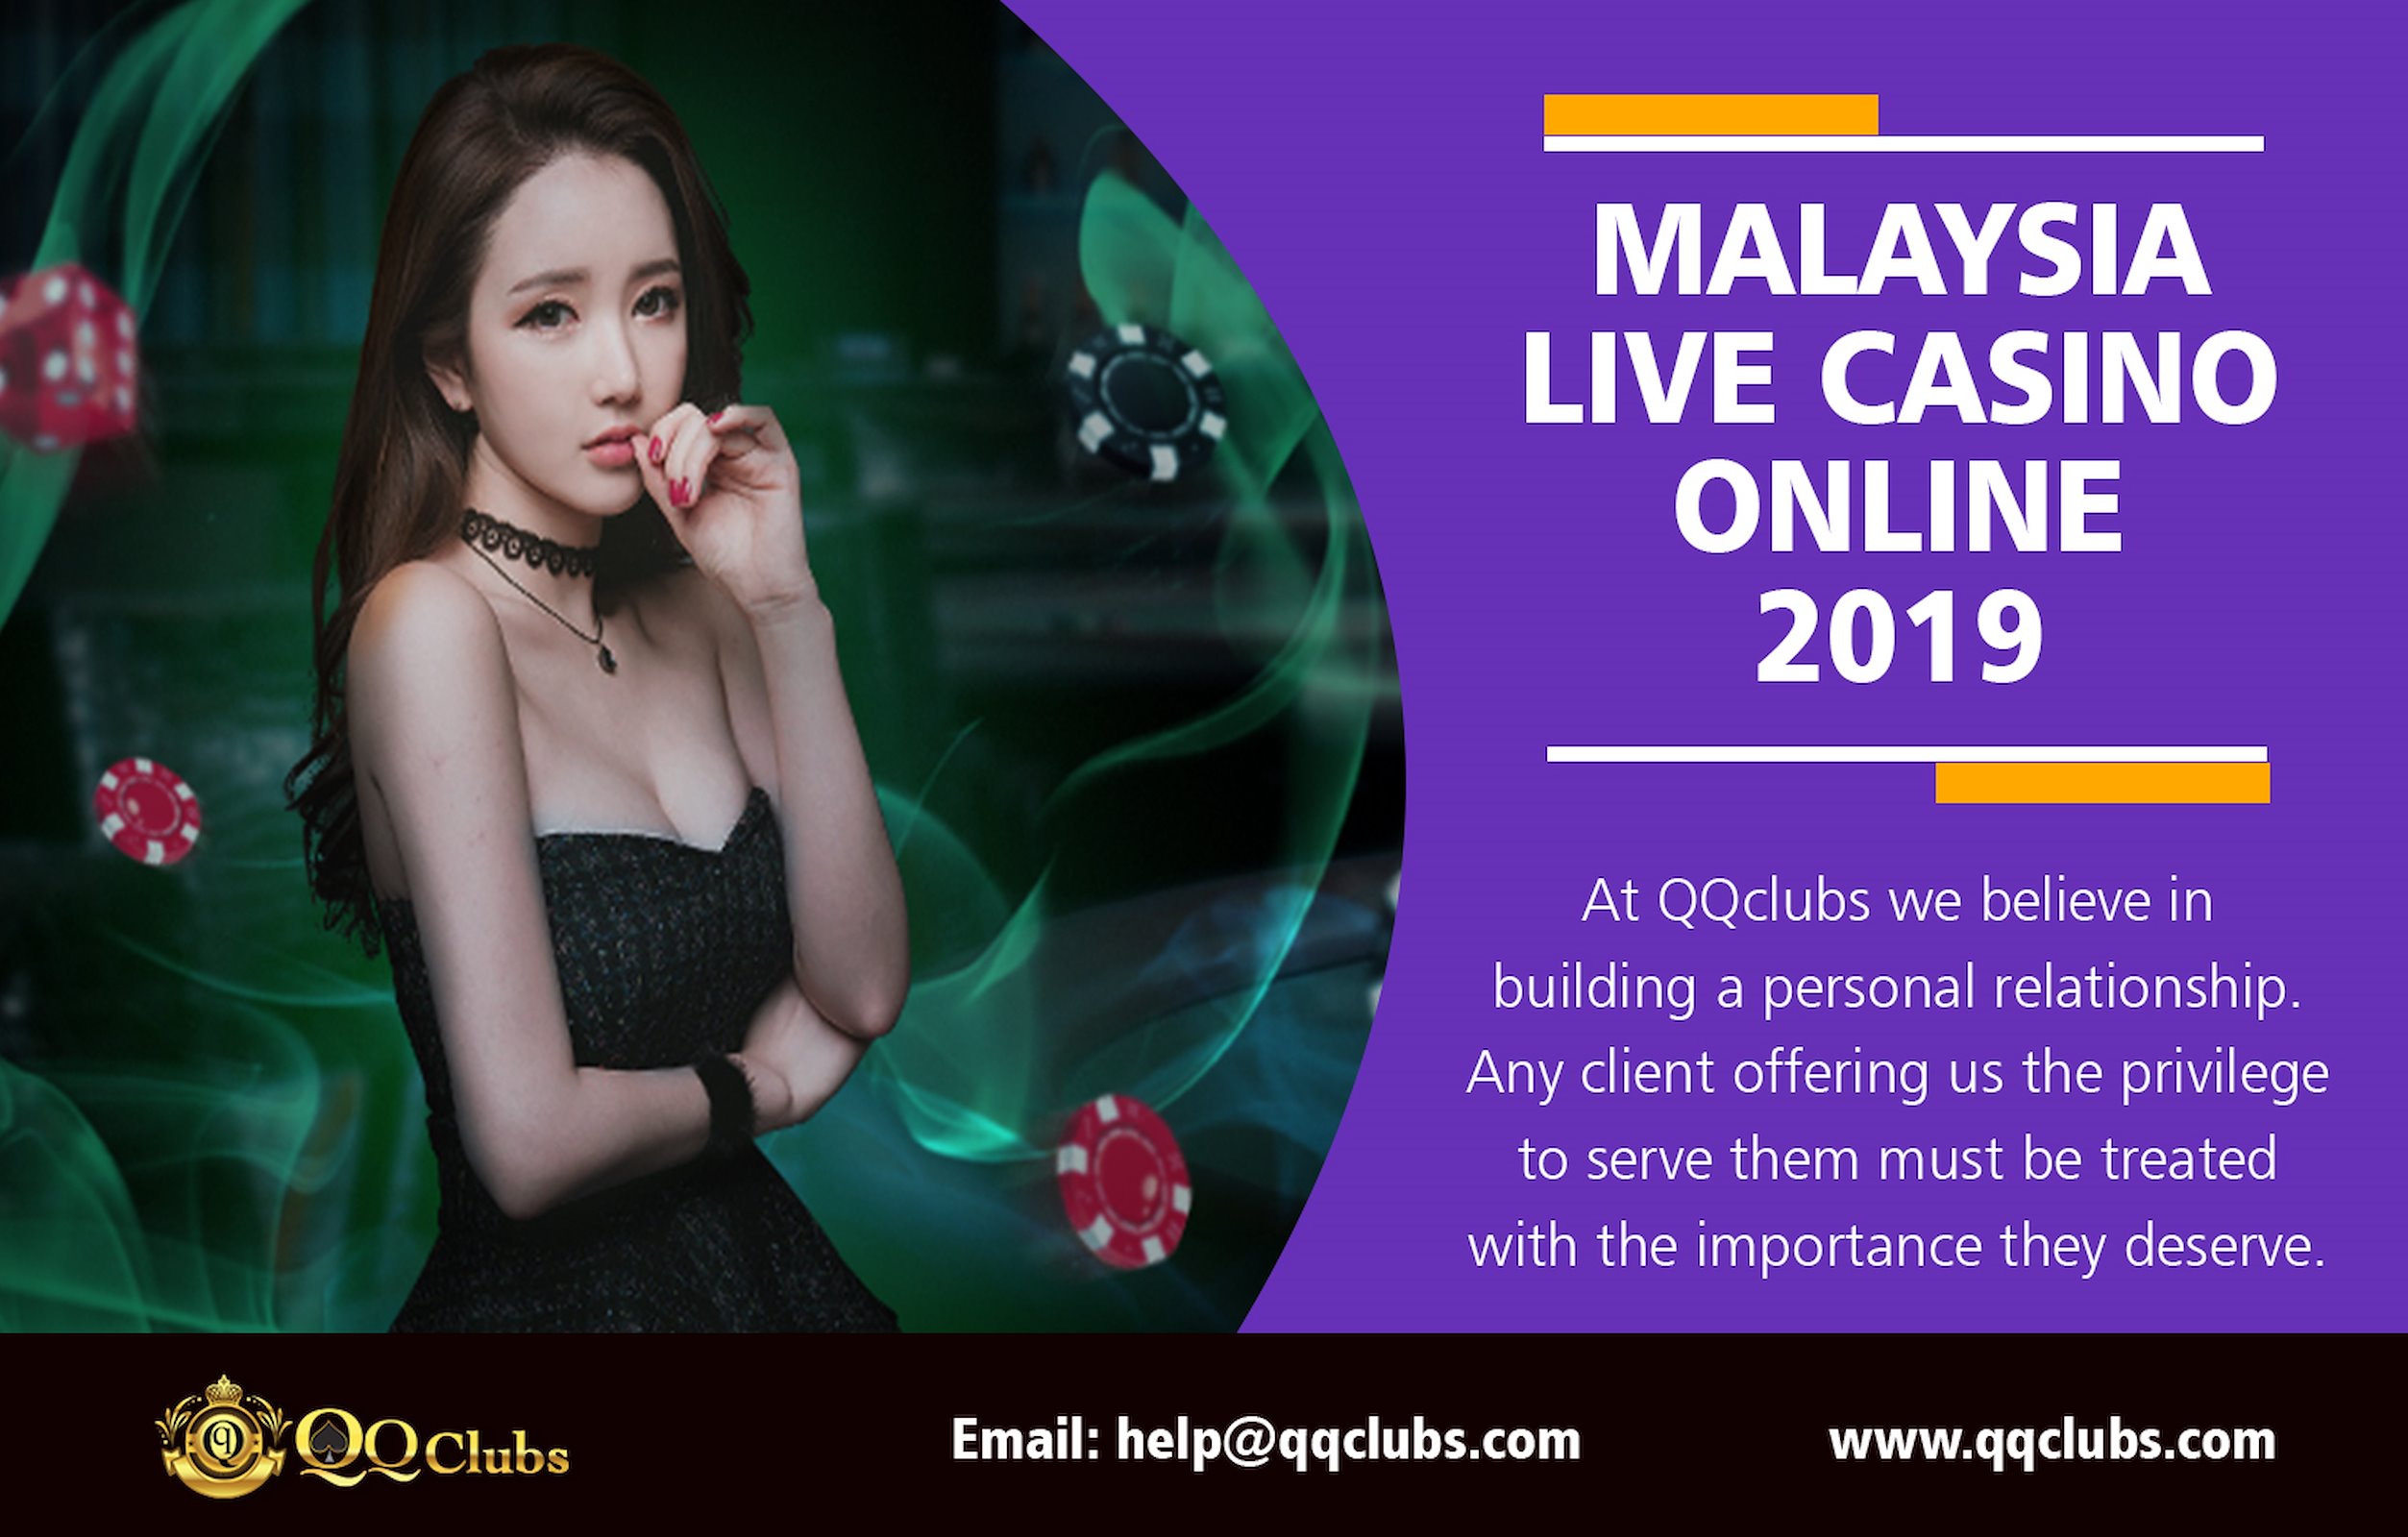 Vbulletin online casino malaysia free credit 2019 selector casino 76